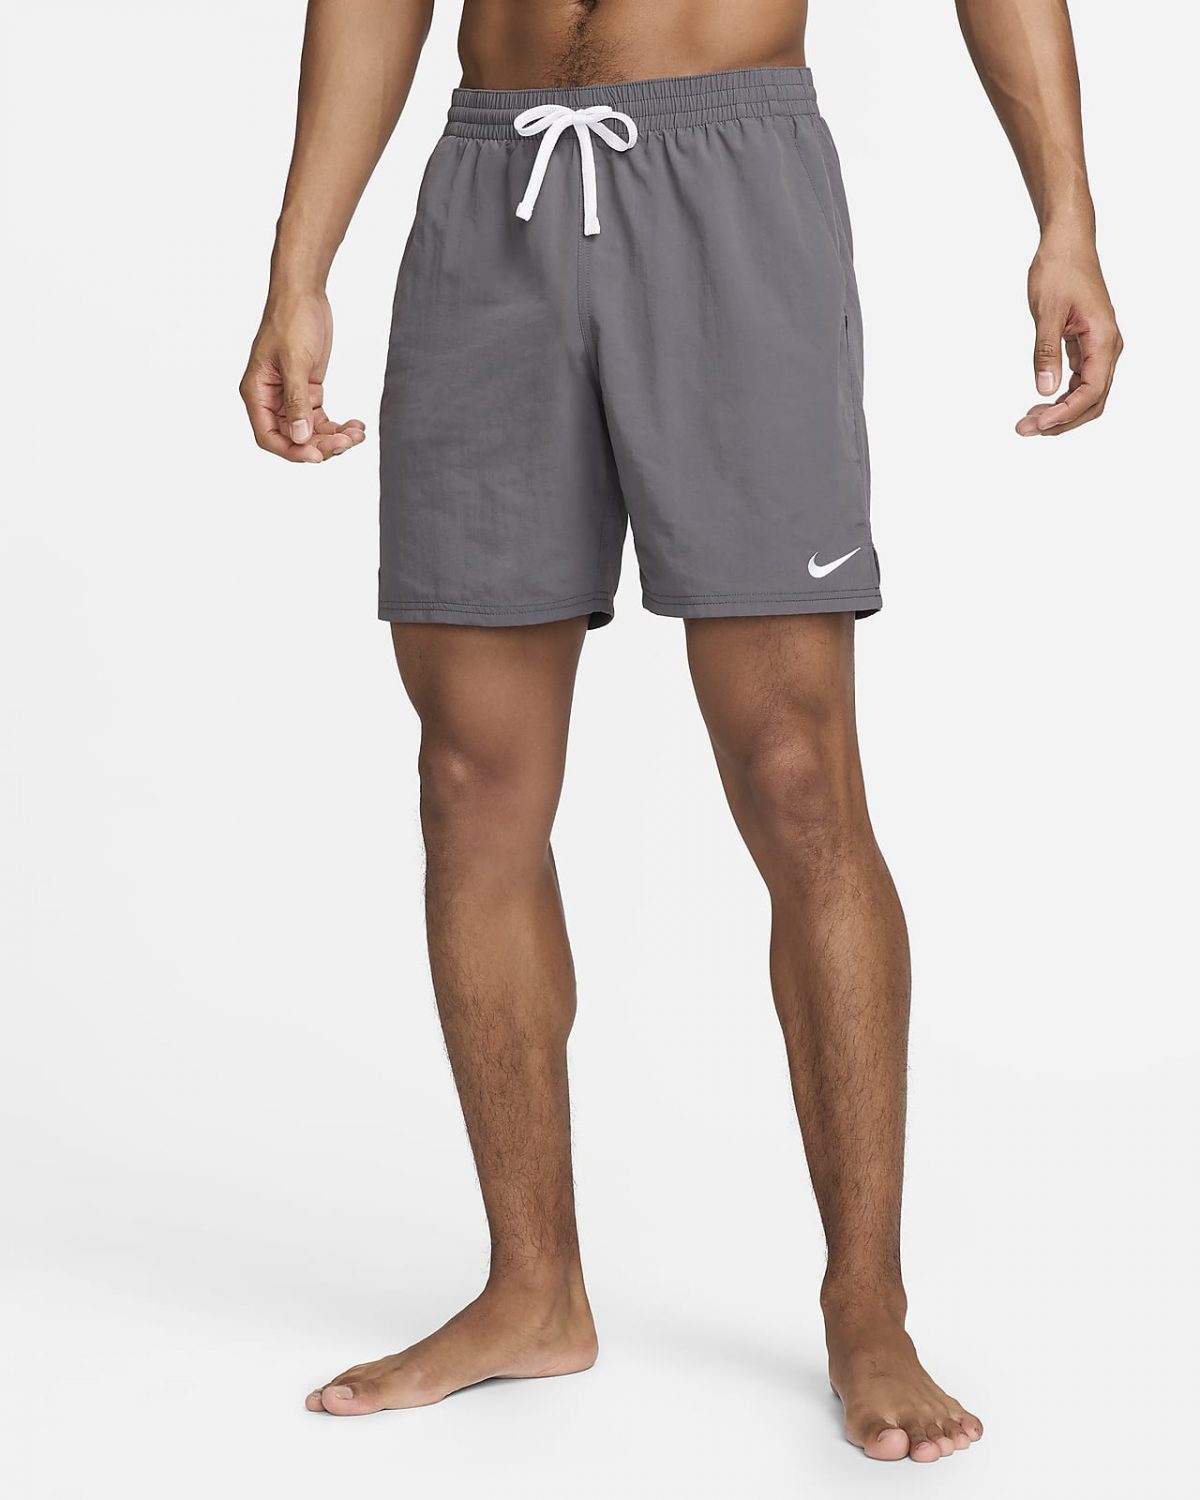 Мужские шорты Nike Swim фото